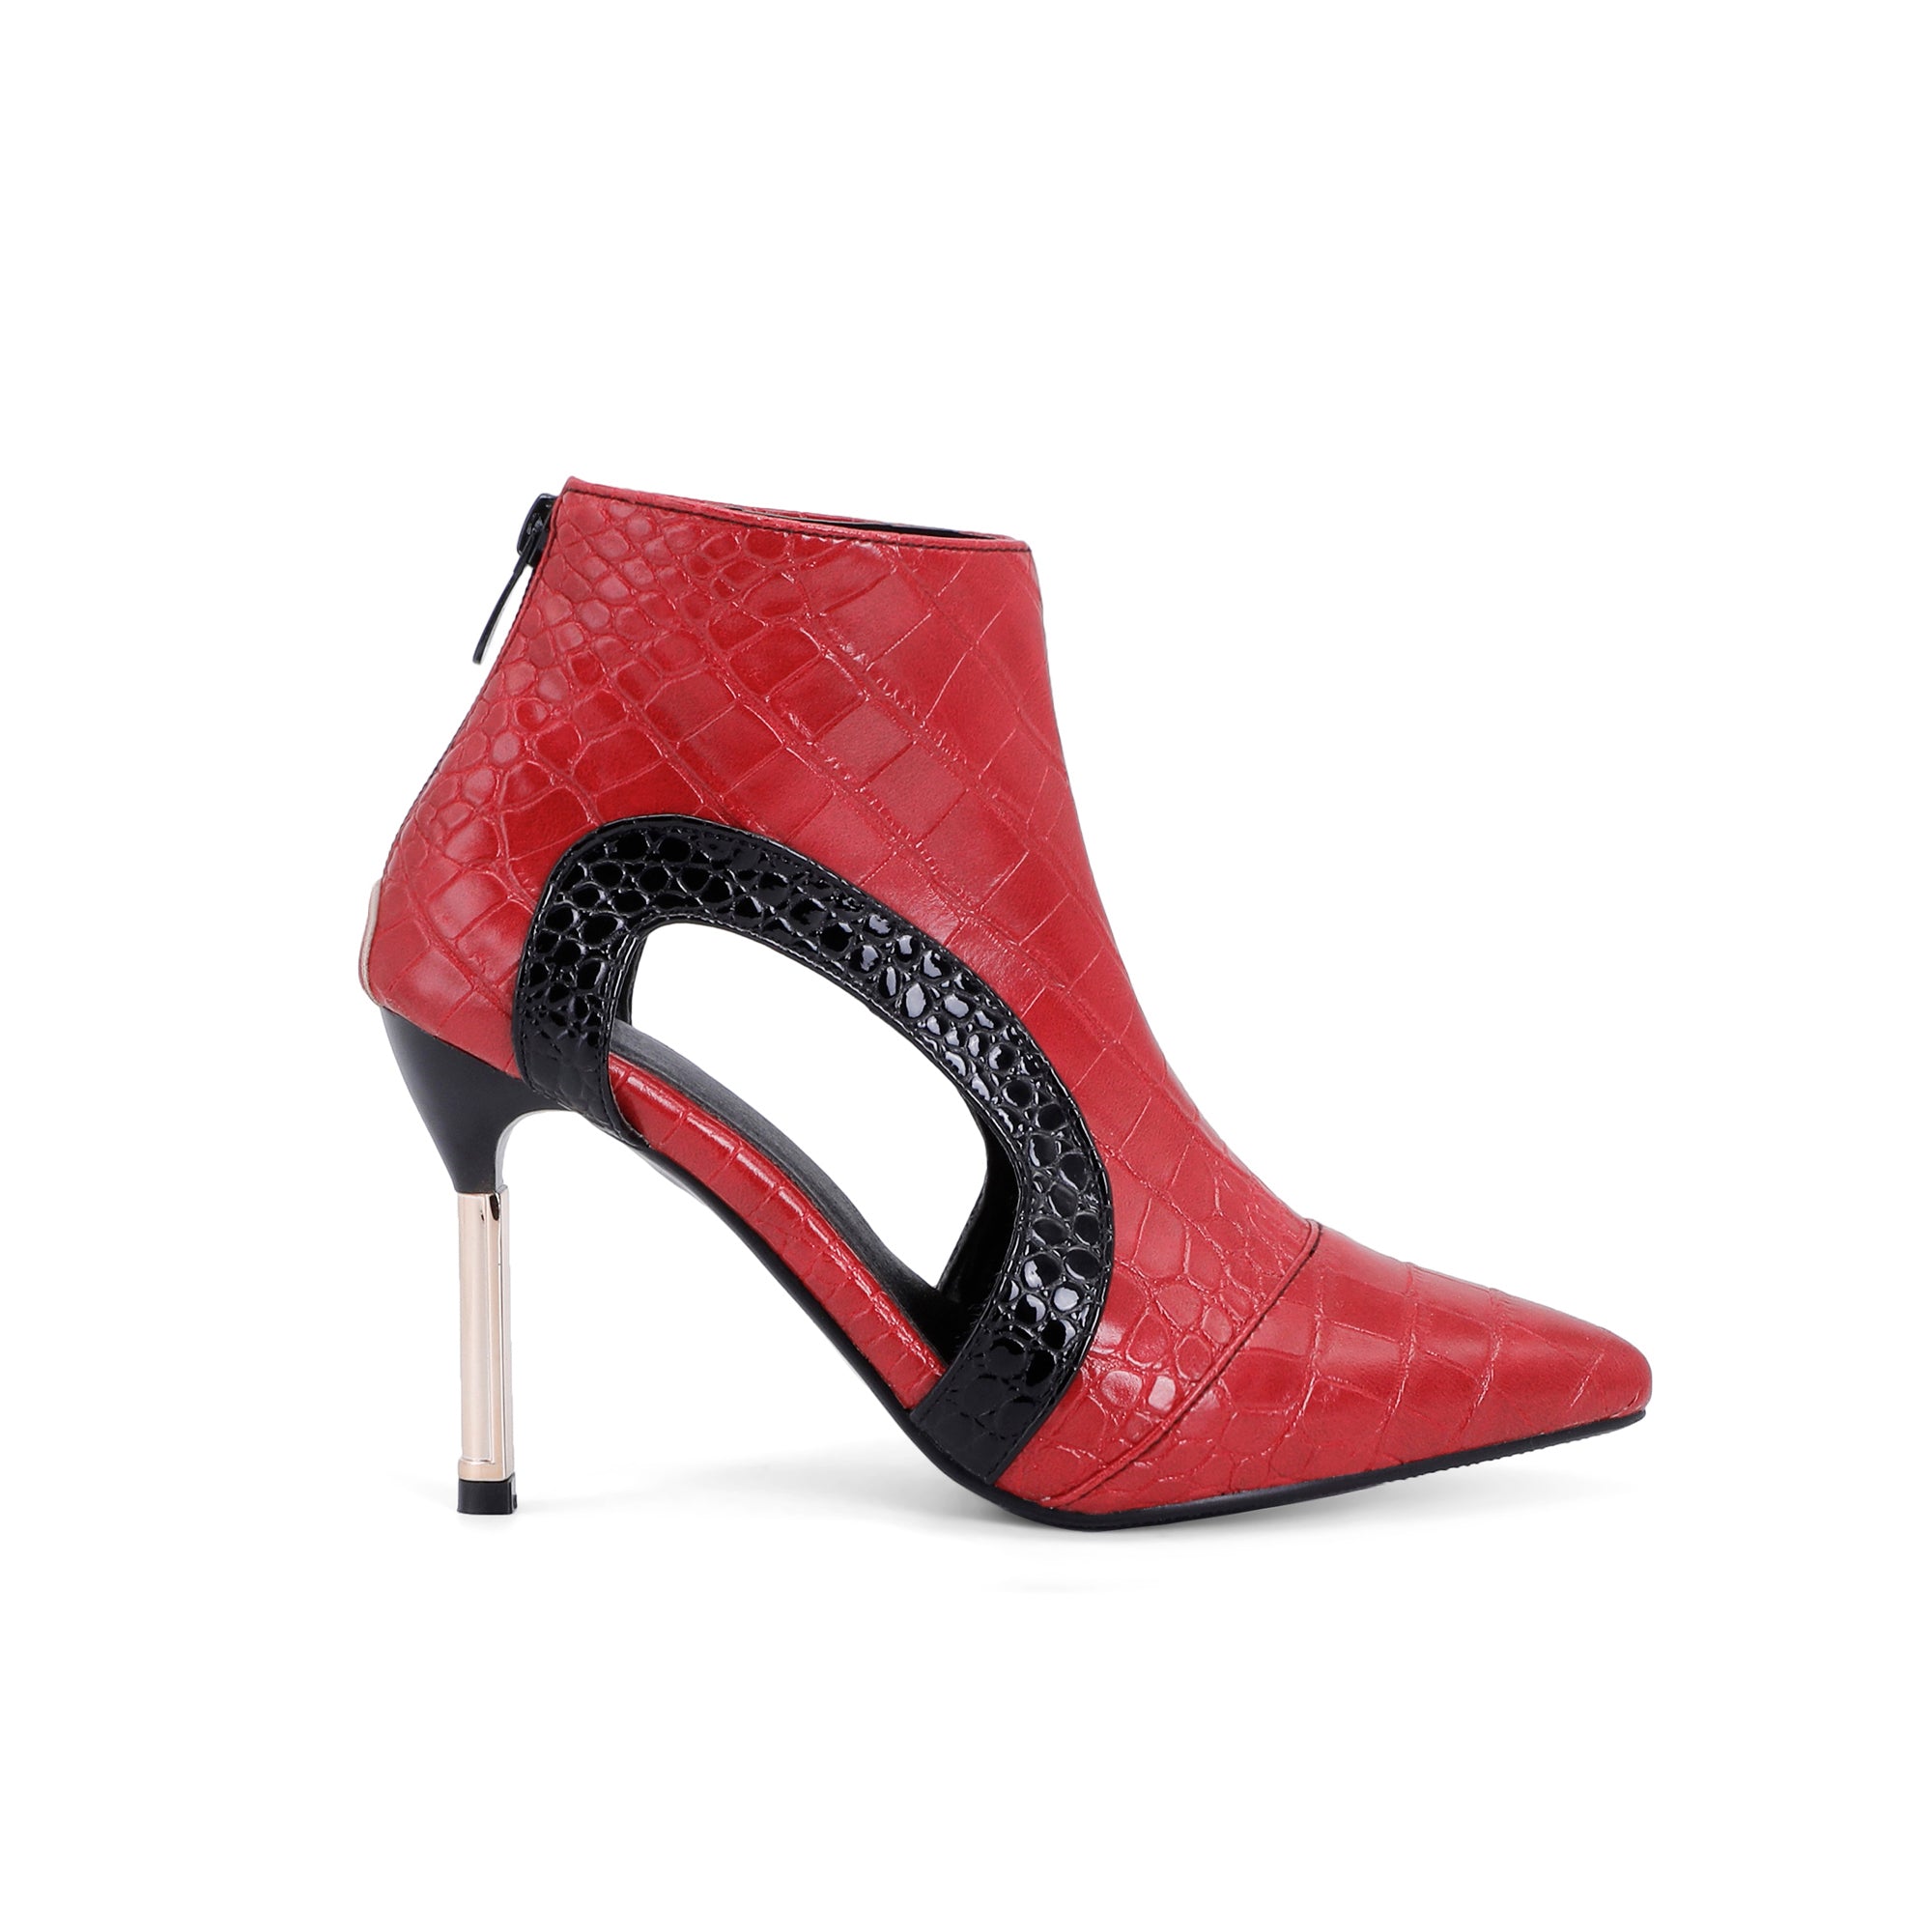 Bigsizeheels Msie magazine stiletto sandals - Red freeshipping - bigsizeheel®-size5-size15 -All Plus Sizes Available!